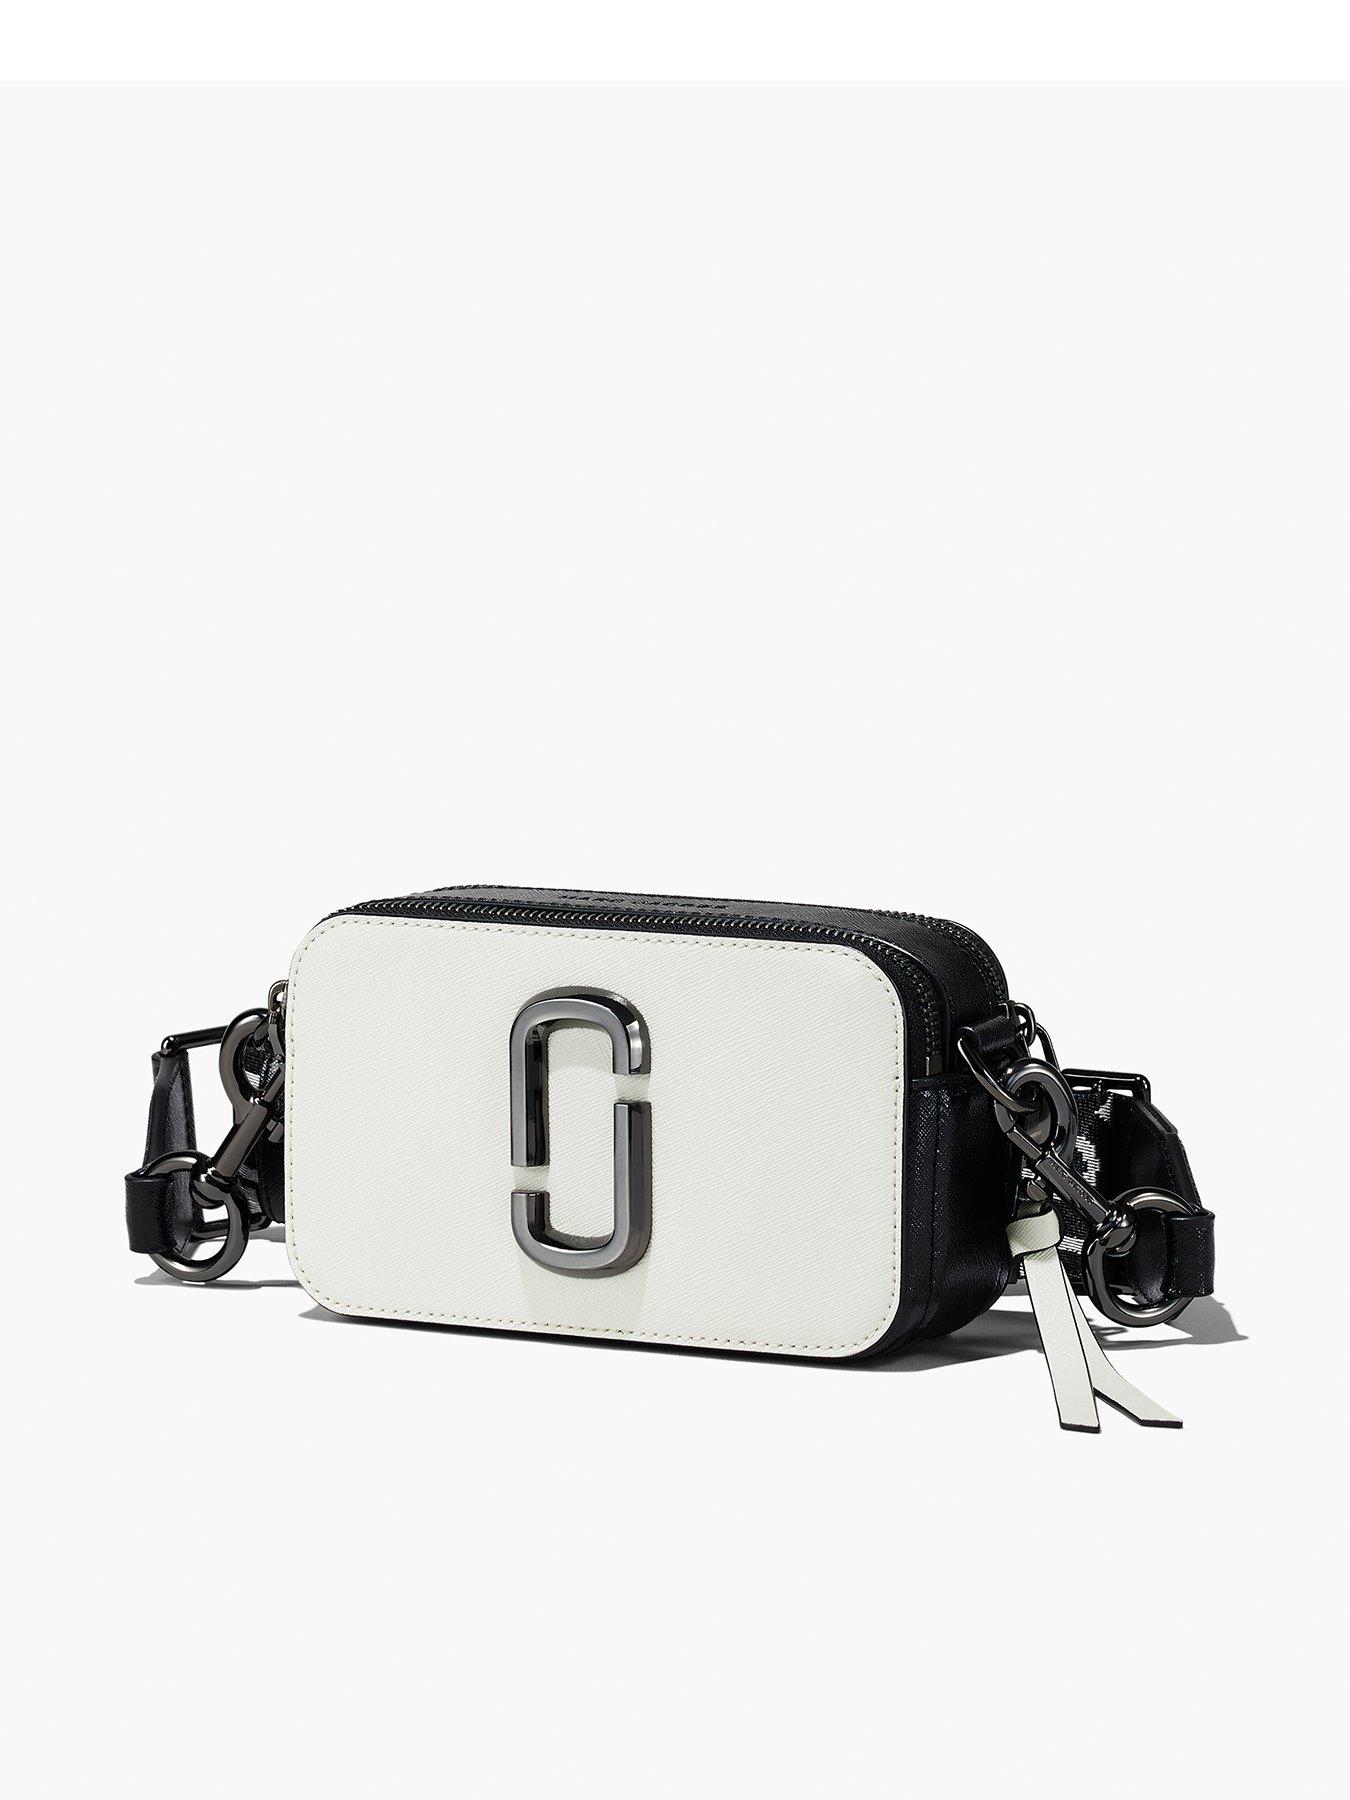 The Snapshot Bi-Colour Cross-Body Bag - White/Black